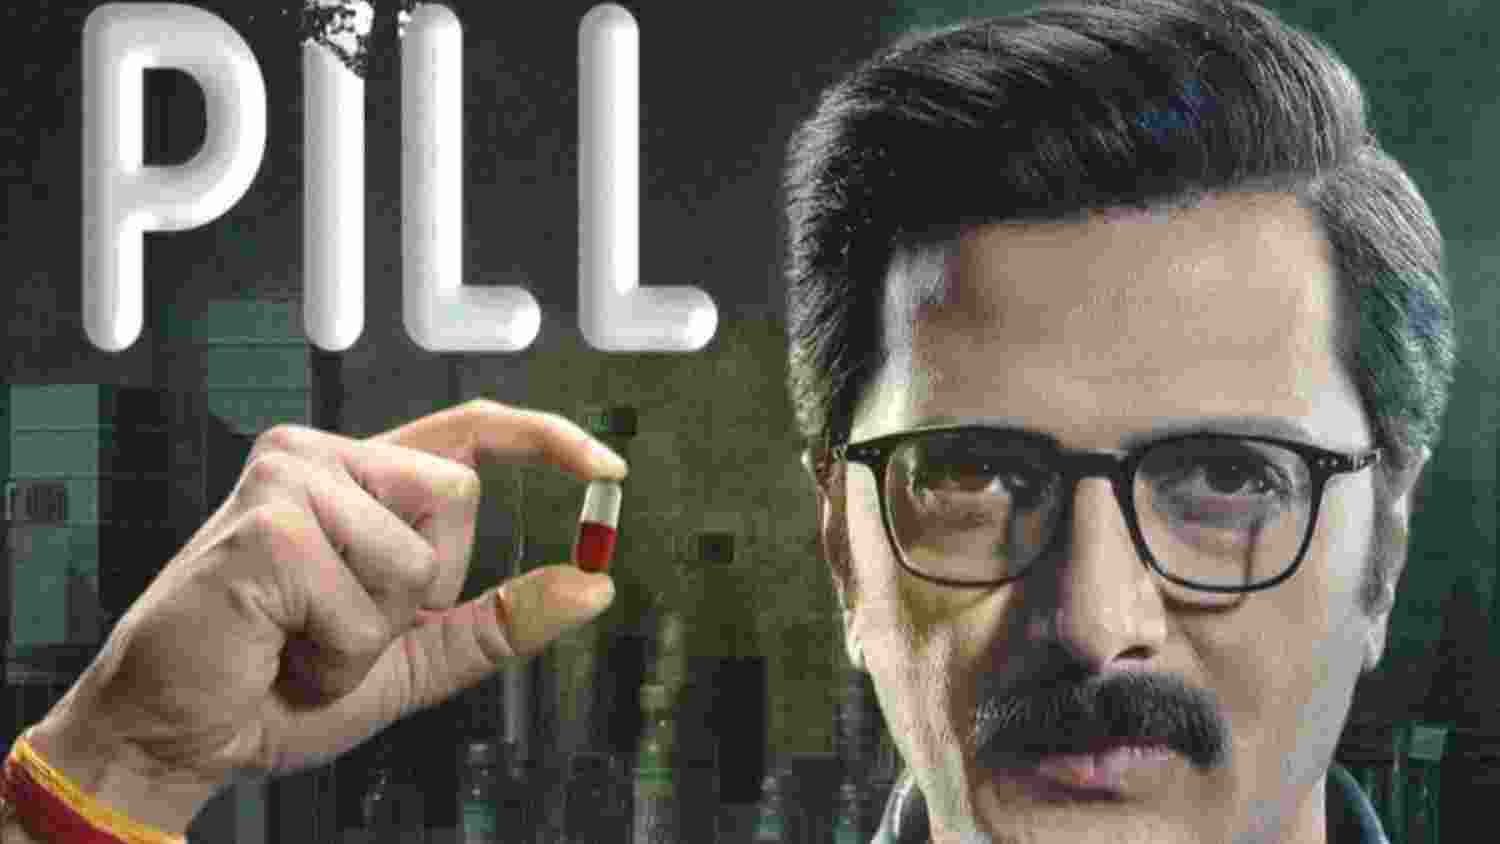 Riteish Deshmukh's 'Pill' debuts on JioCinema July 12